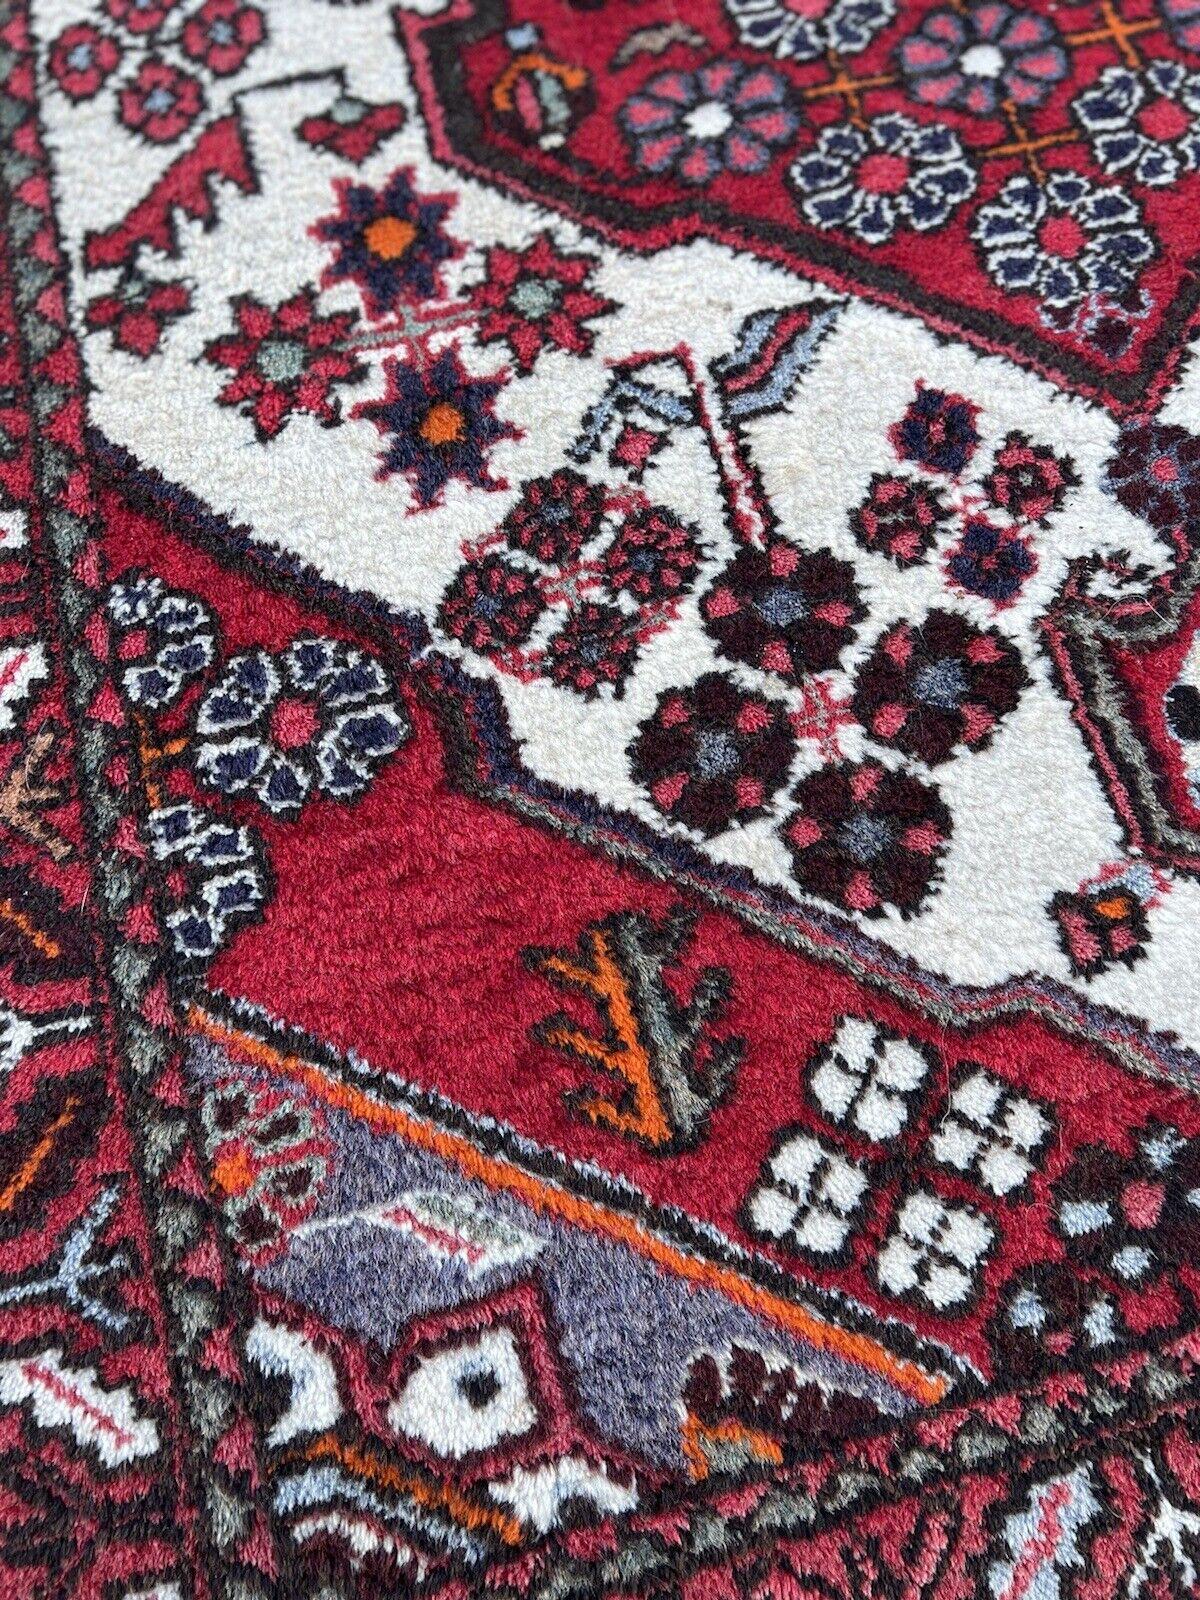 Handmade Vintage Persian Style Hamadan Rug 3.4' x 5.2', 1970s - 1S65 For Sale 2